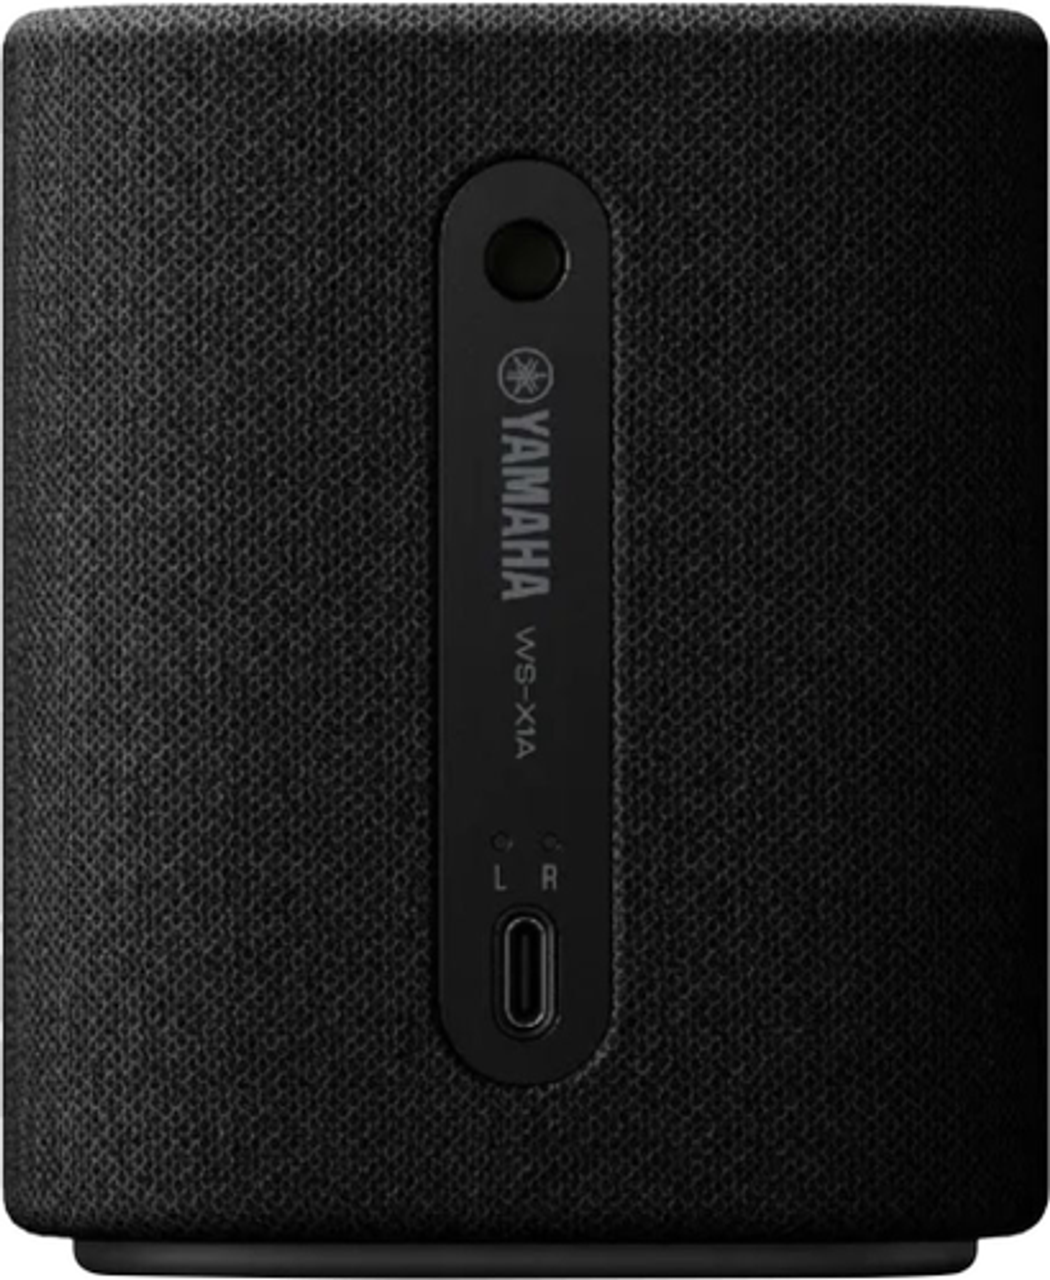 Yamaha - True X Speaker 1A Surround Rear Channel Speaker, Wireless and Portable - Black